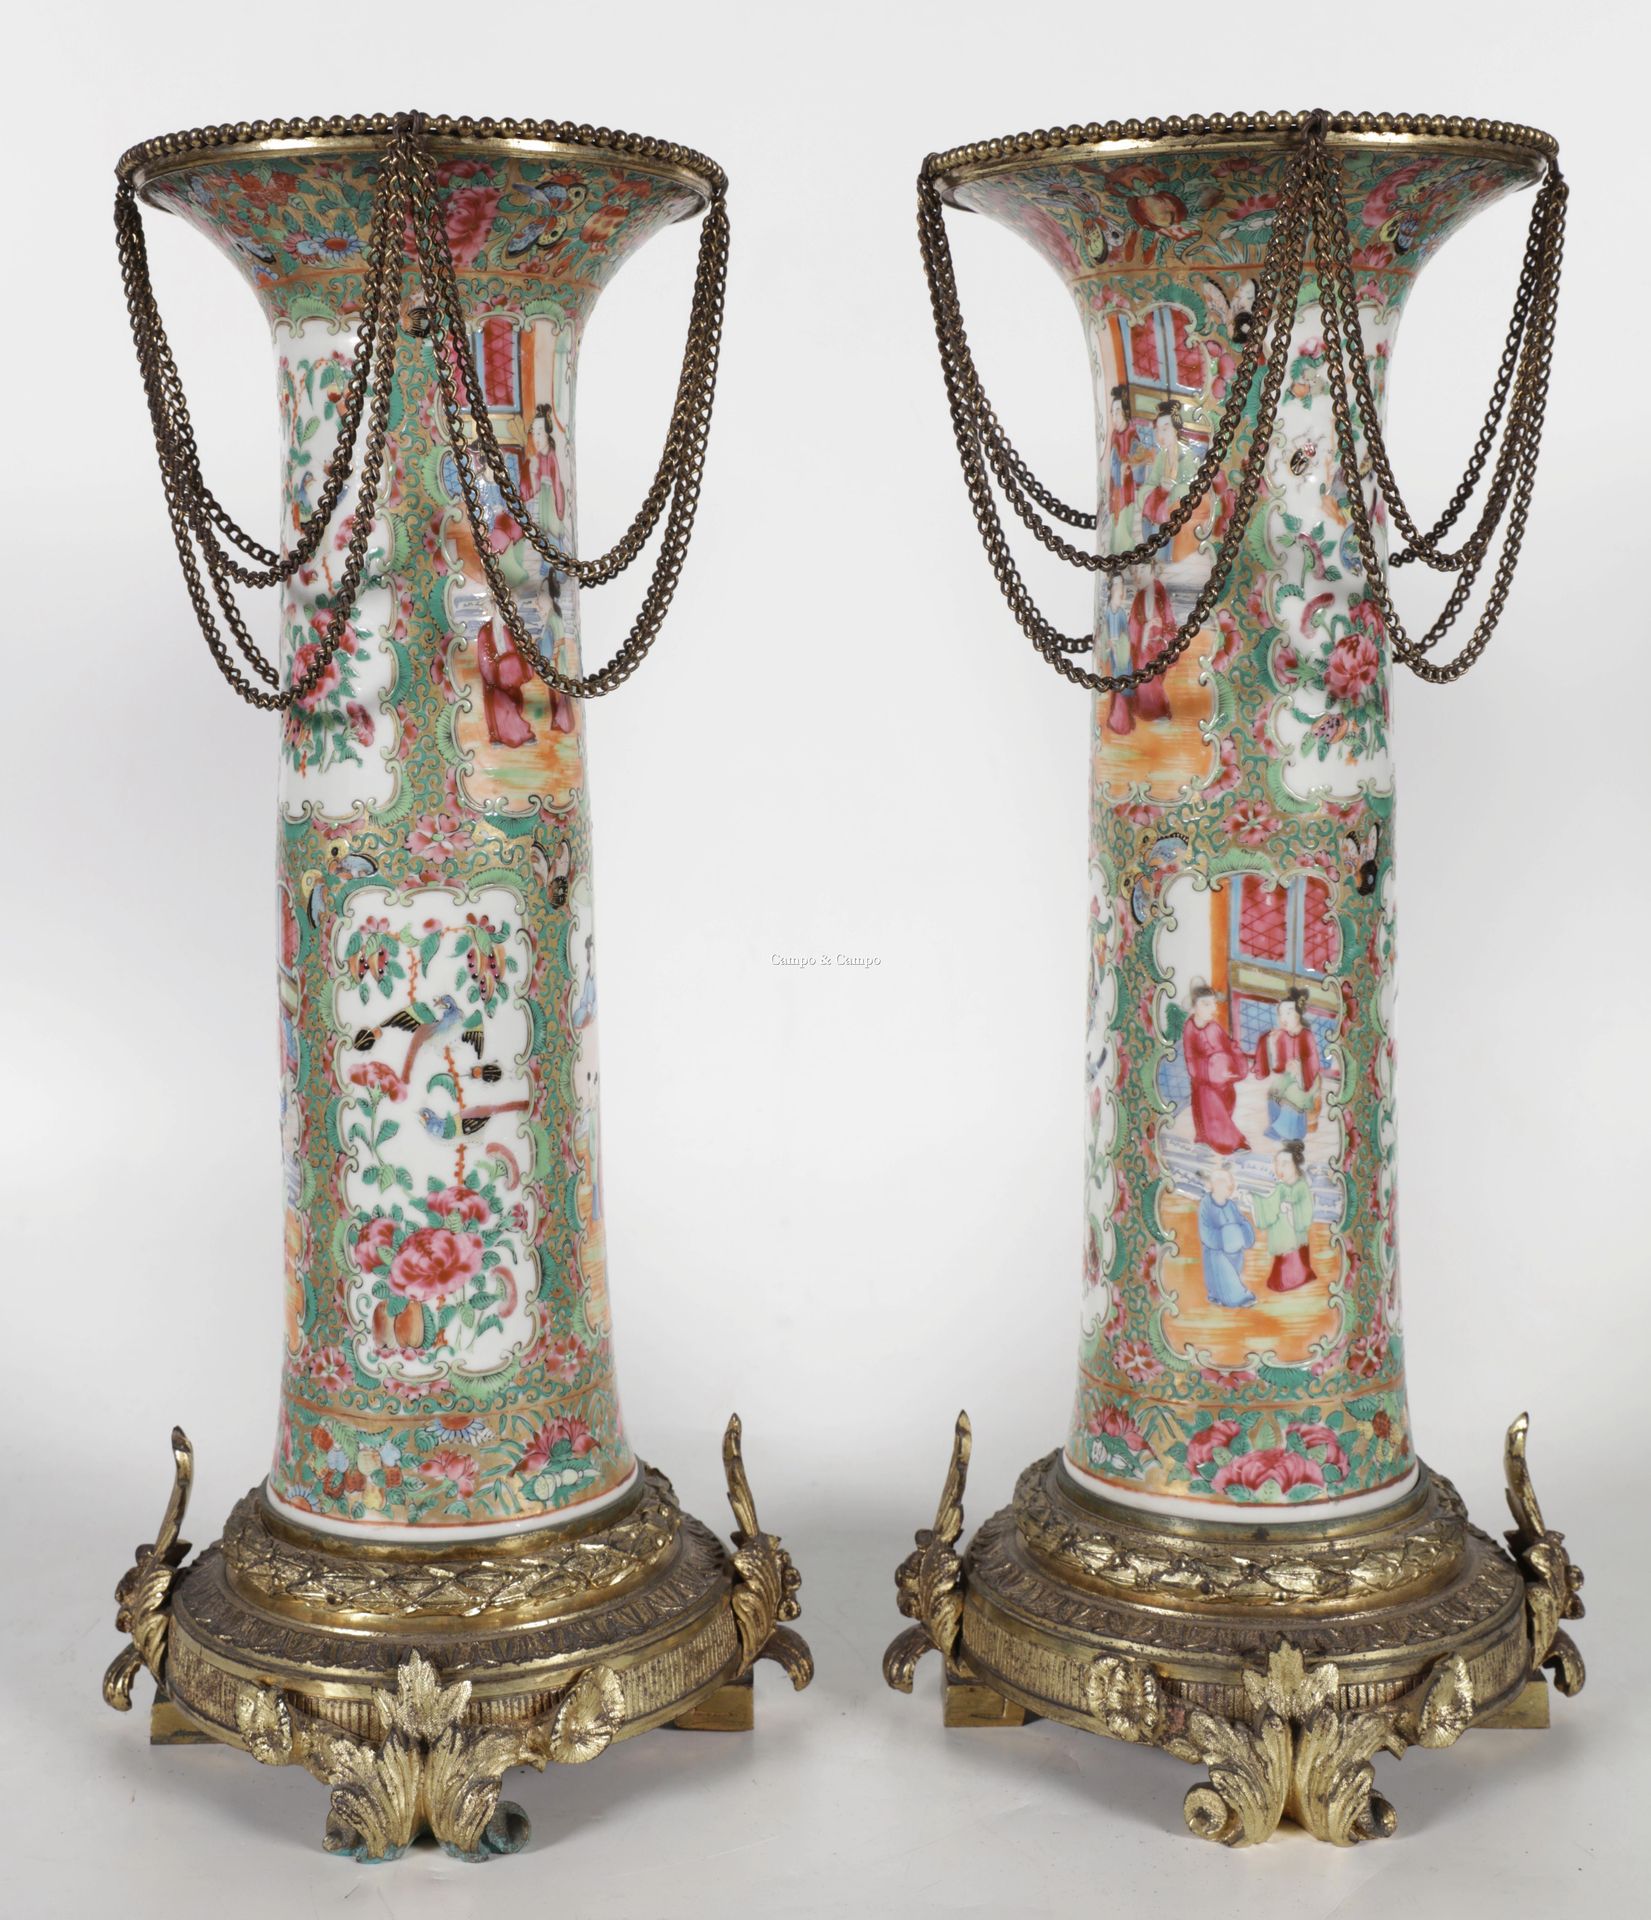 VARIA 一对中国瓷器的喇叭形花瓶，是玫瑰色的。广东人的装饰，有字的刻痕与有鸟、甲虫、蝴蝶和植物的刻痕交替出现。火鎏金的青铜支架。乾隆时期
Paar trom&hellip;